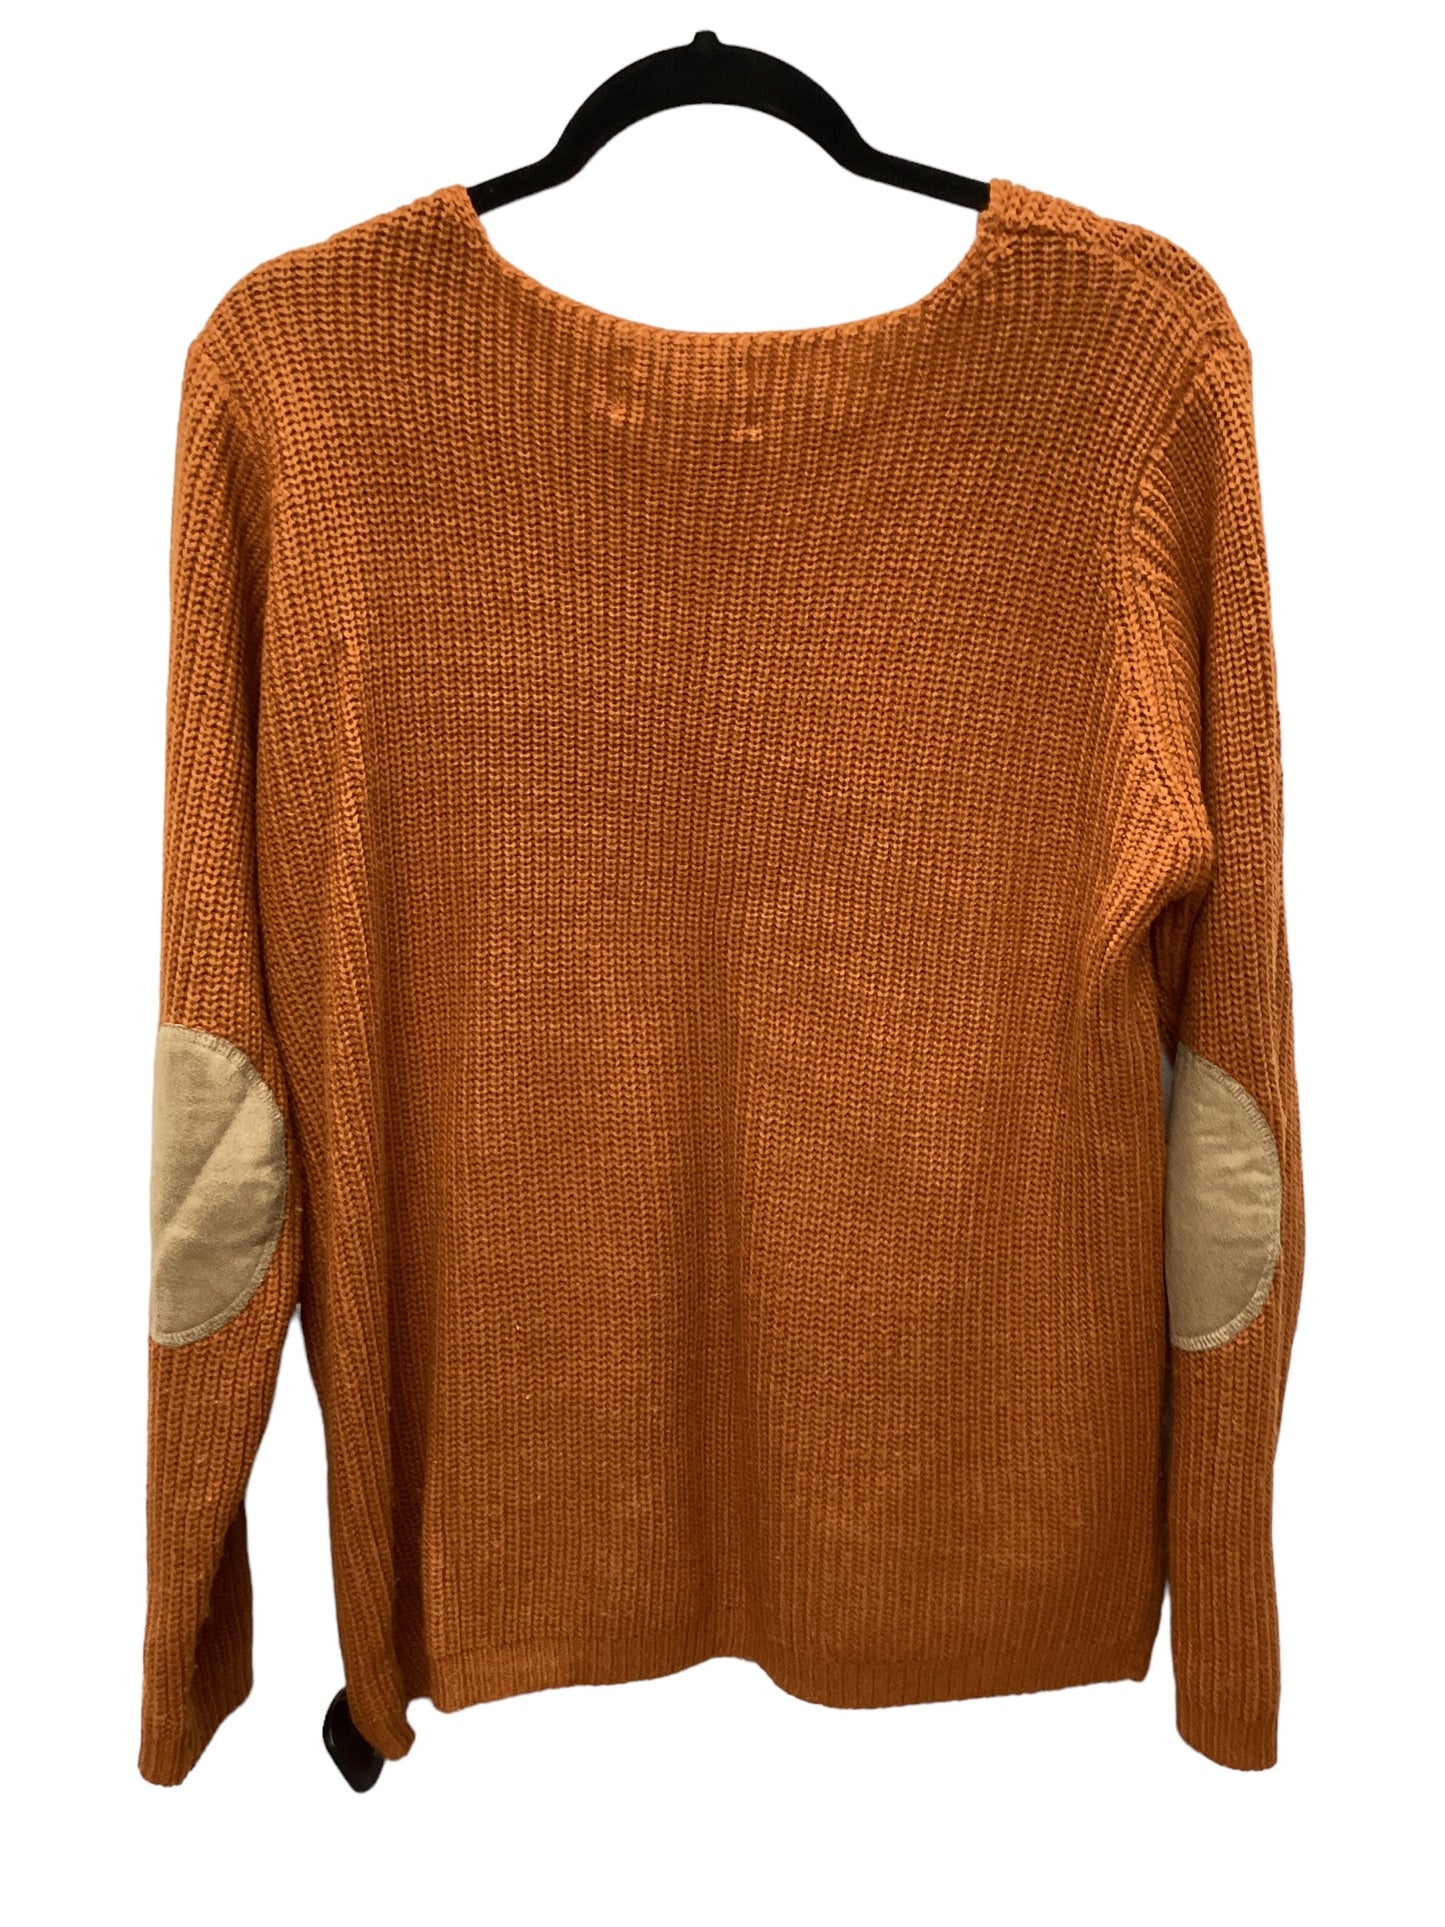 Sweater By Debbie Morgan  Size: M